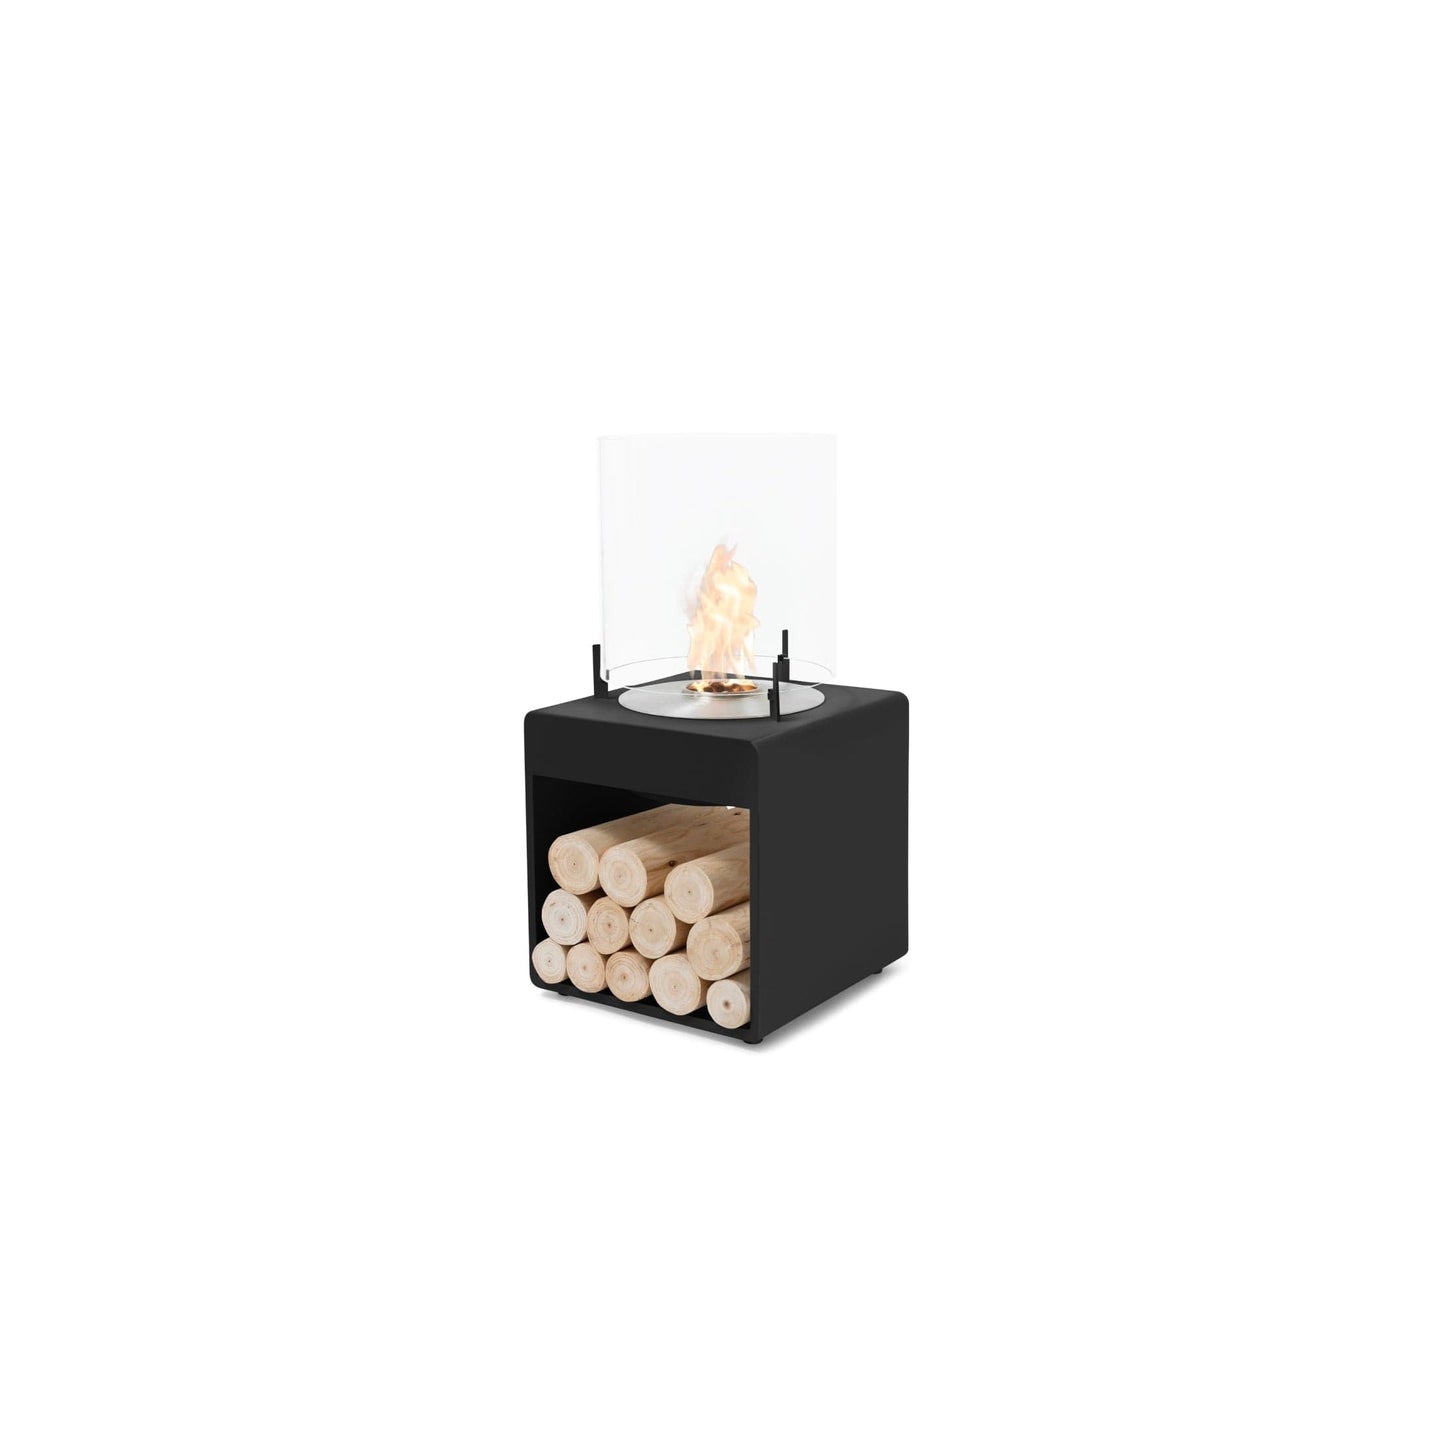 EcoSmart Fire POP 3L 27" Black Freestanding Designer Fireplace with Stainless Steel Burner by MAD Design Group